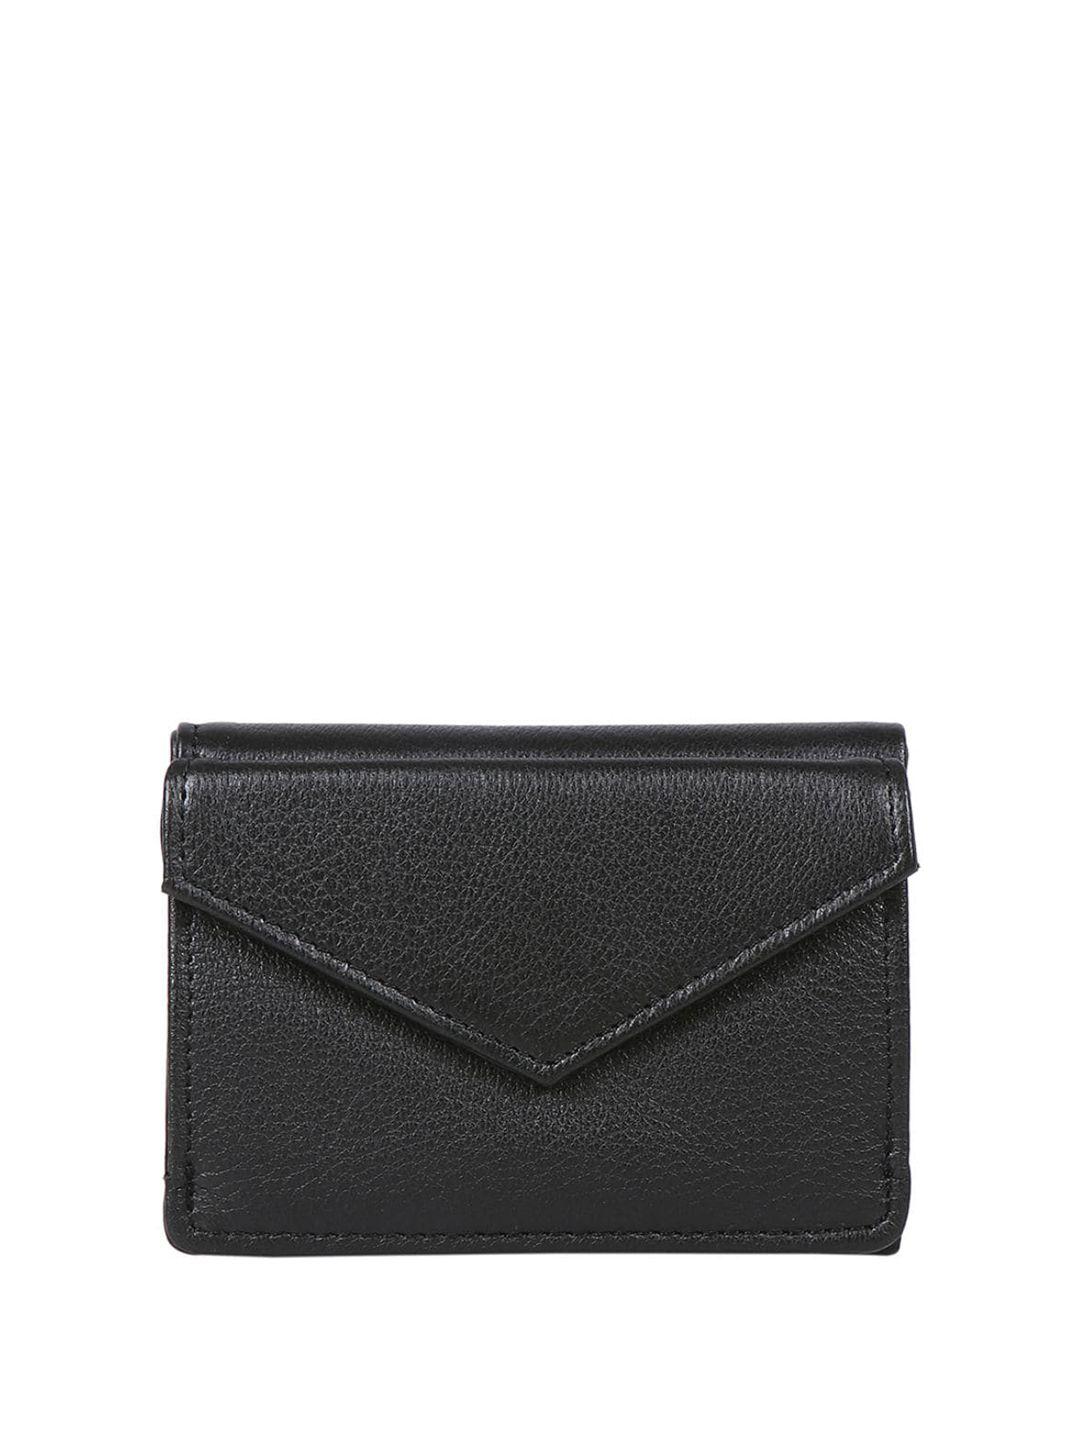 hidesign women leather three fold wallet